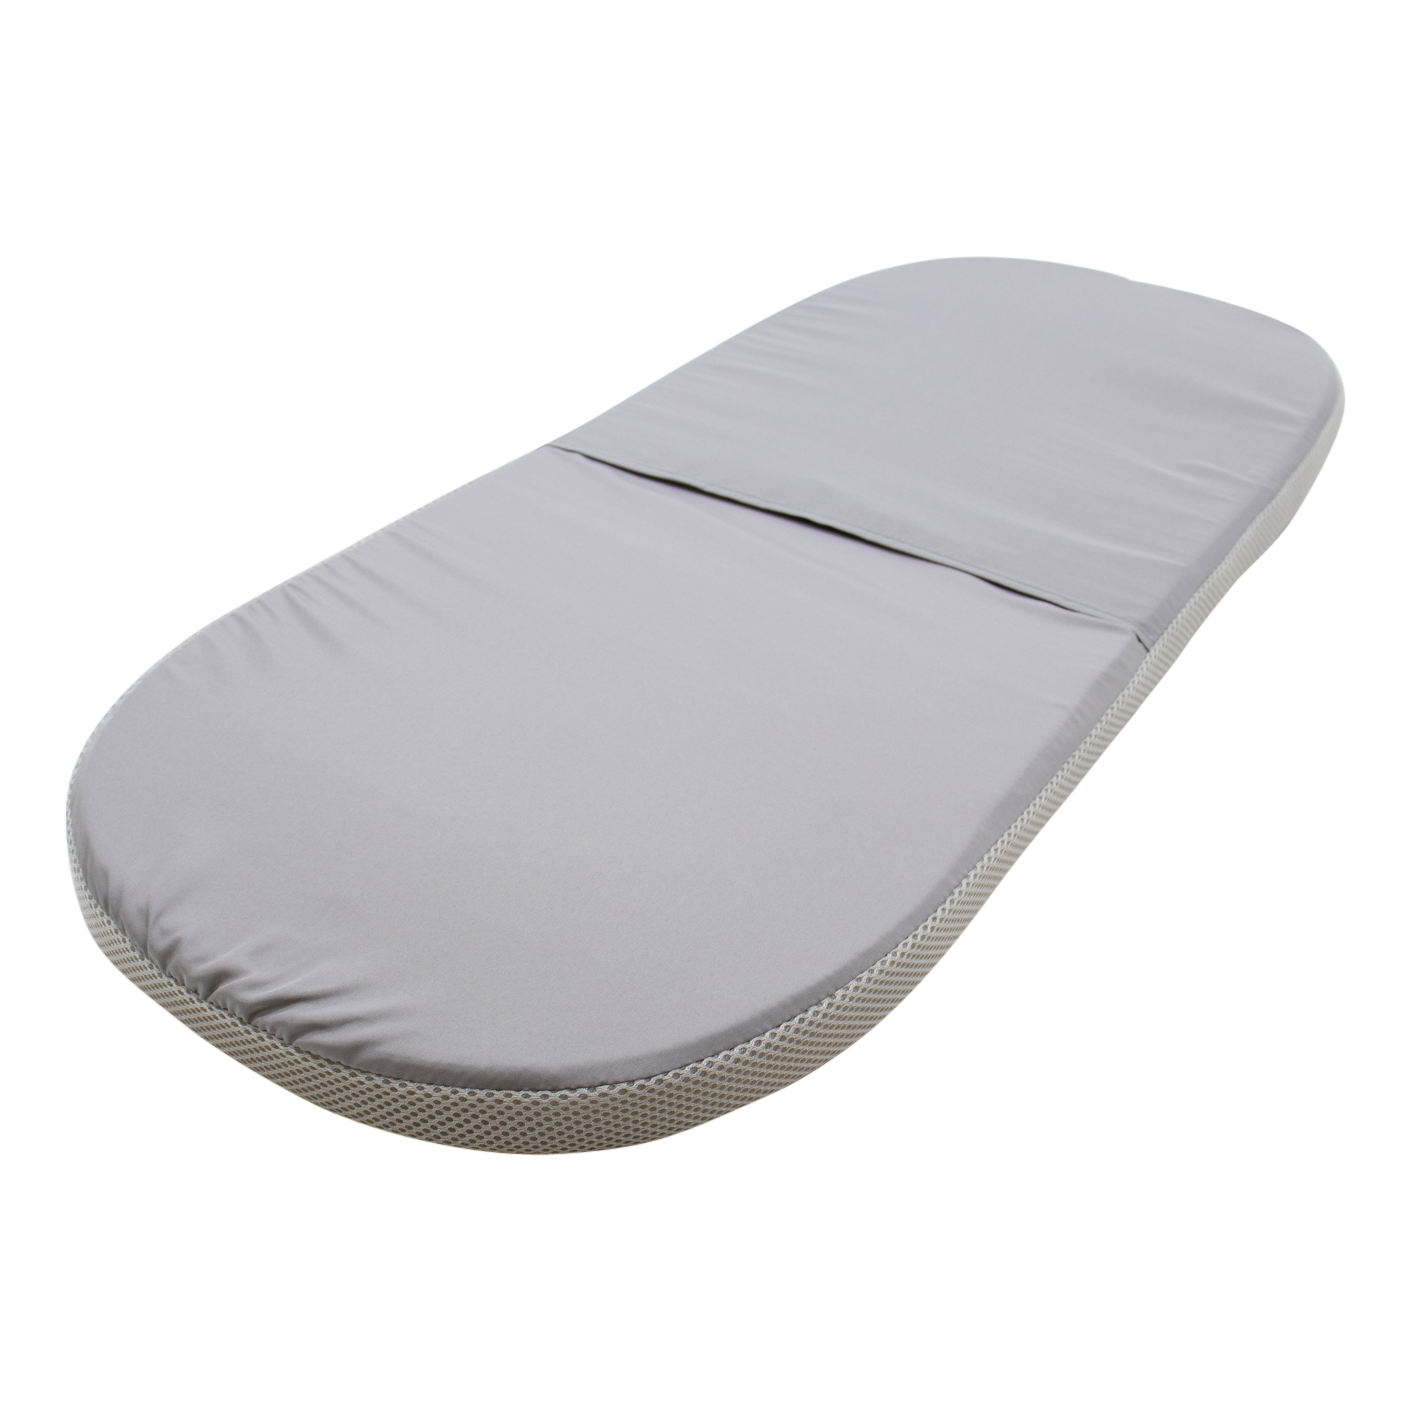 Carrycot mattress complete | Harvey³